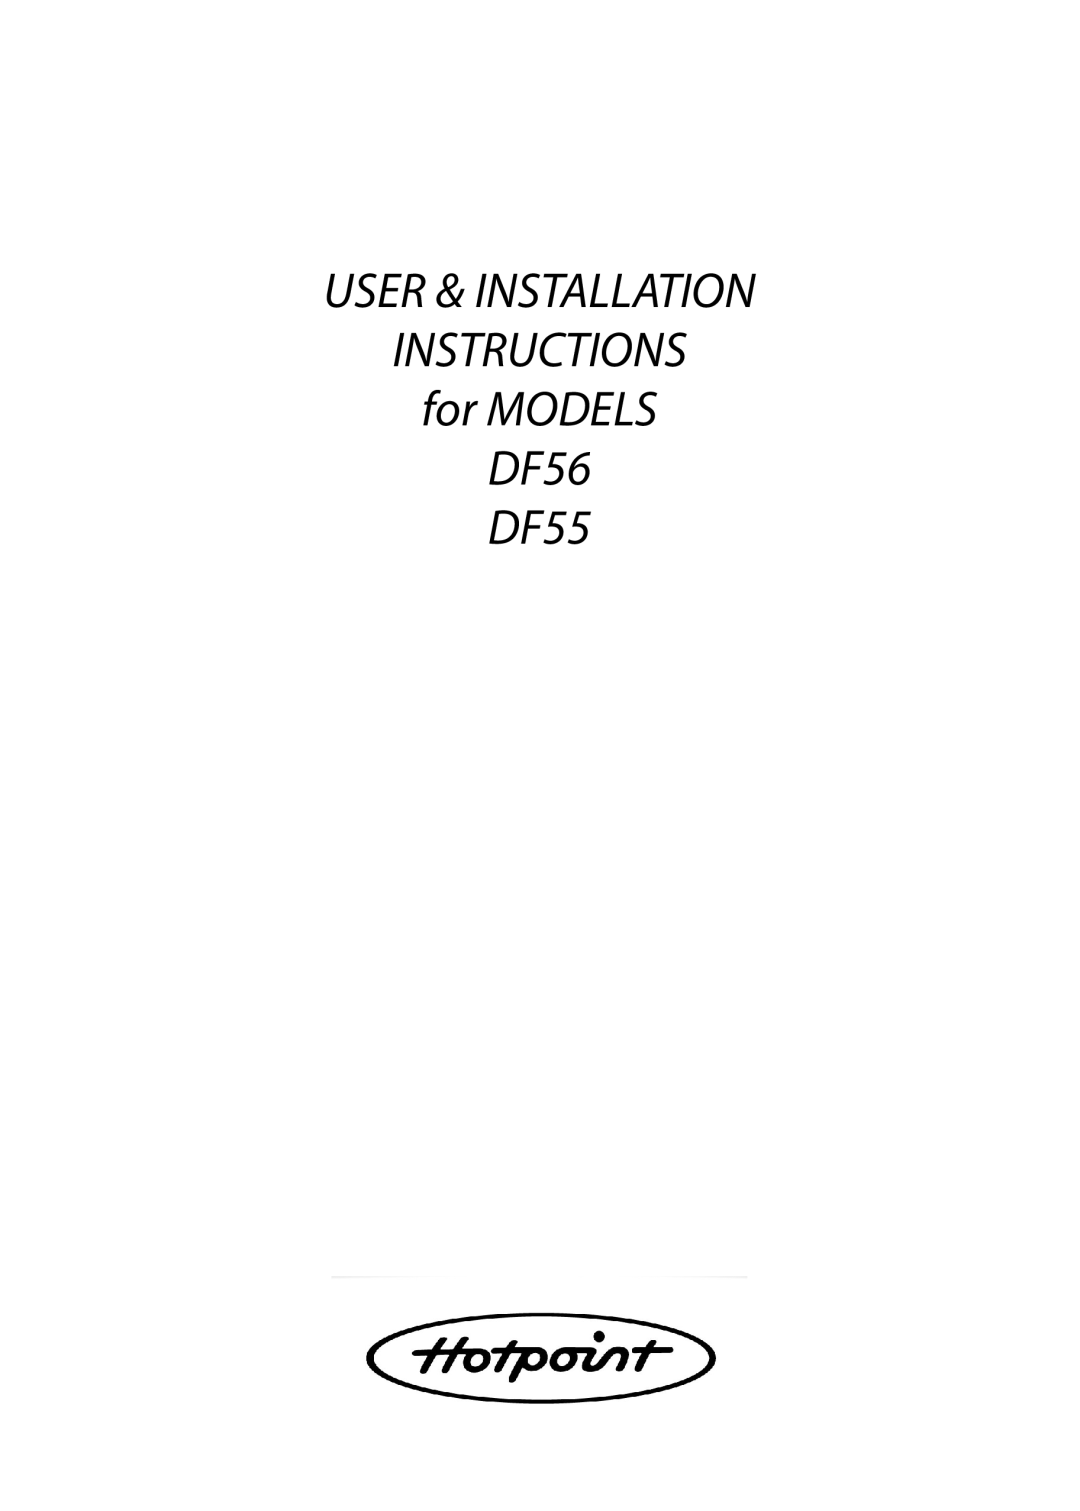 Hotpoint installation instructions USER & INSTALLATION INSTRUCTIONS for MODELS DF56 DF55 